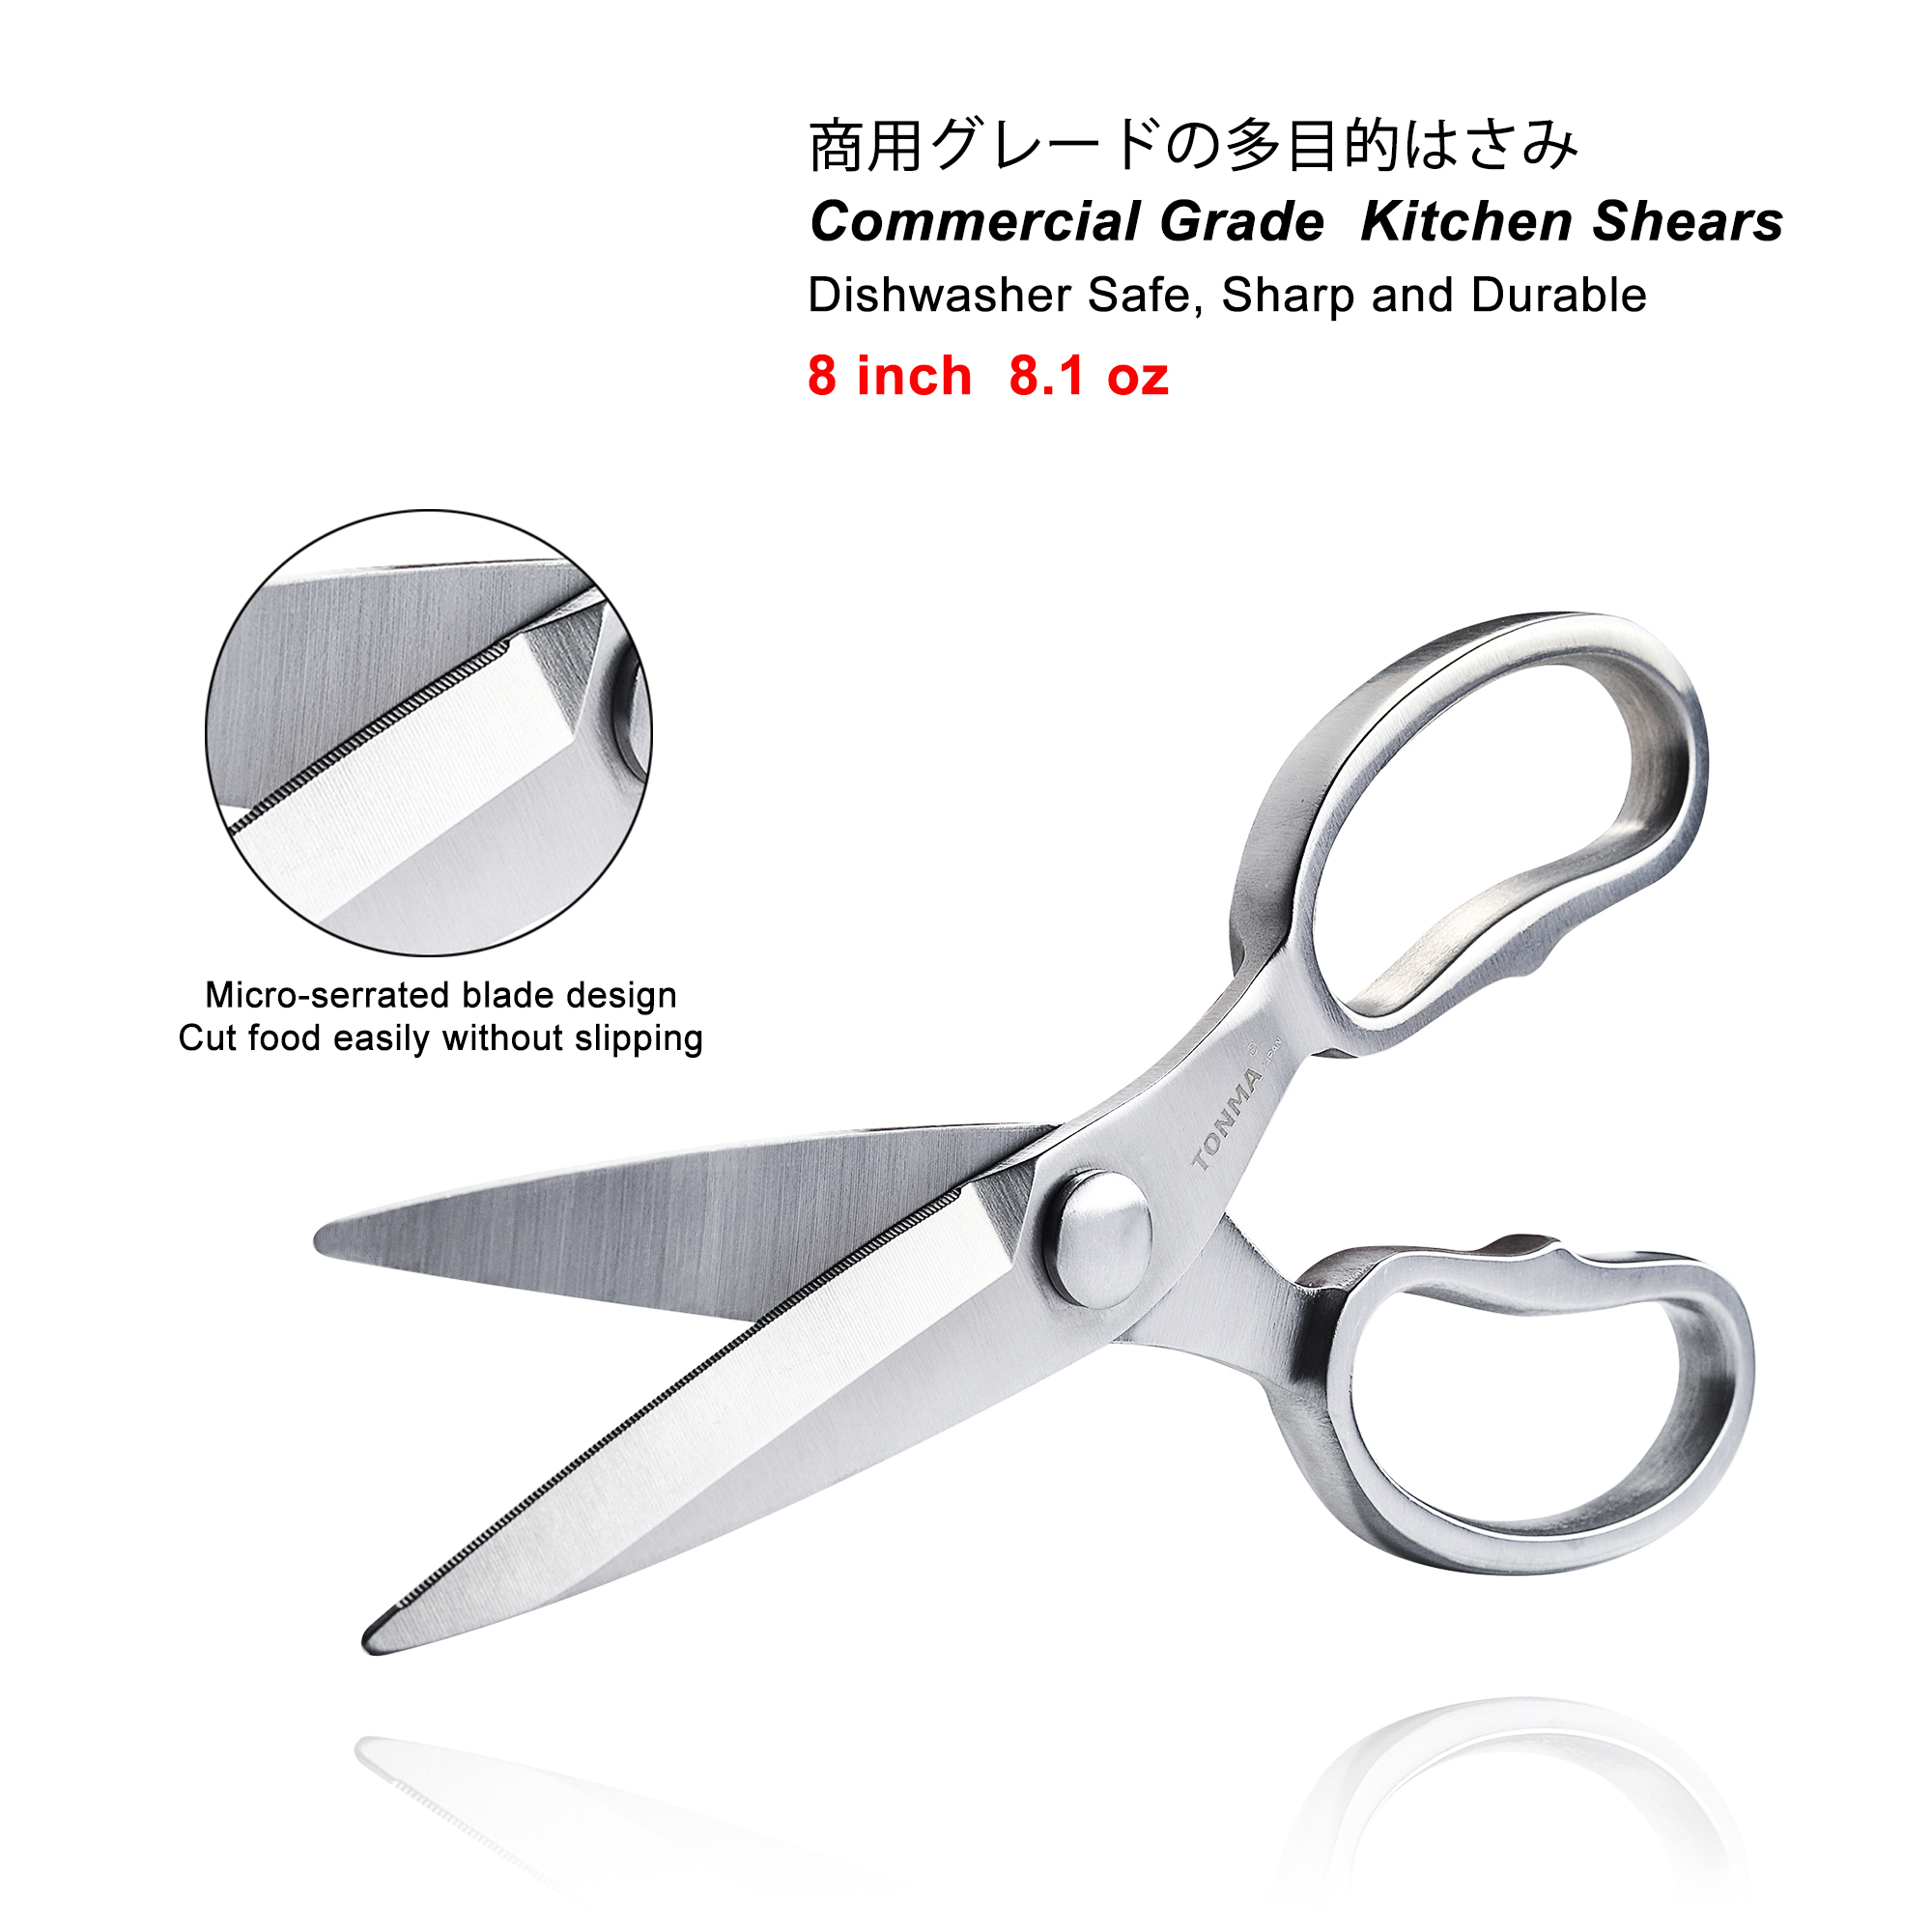 TONMA Kitchen Shears Heavy Duty [Made in Japan] 9.5” Sharp